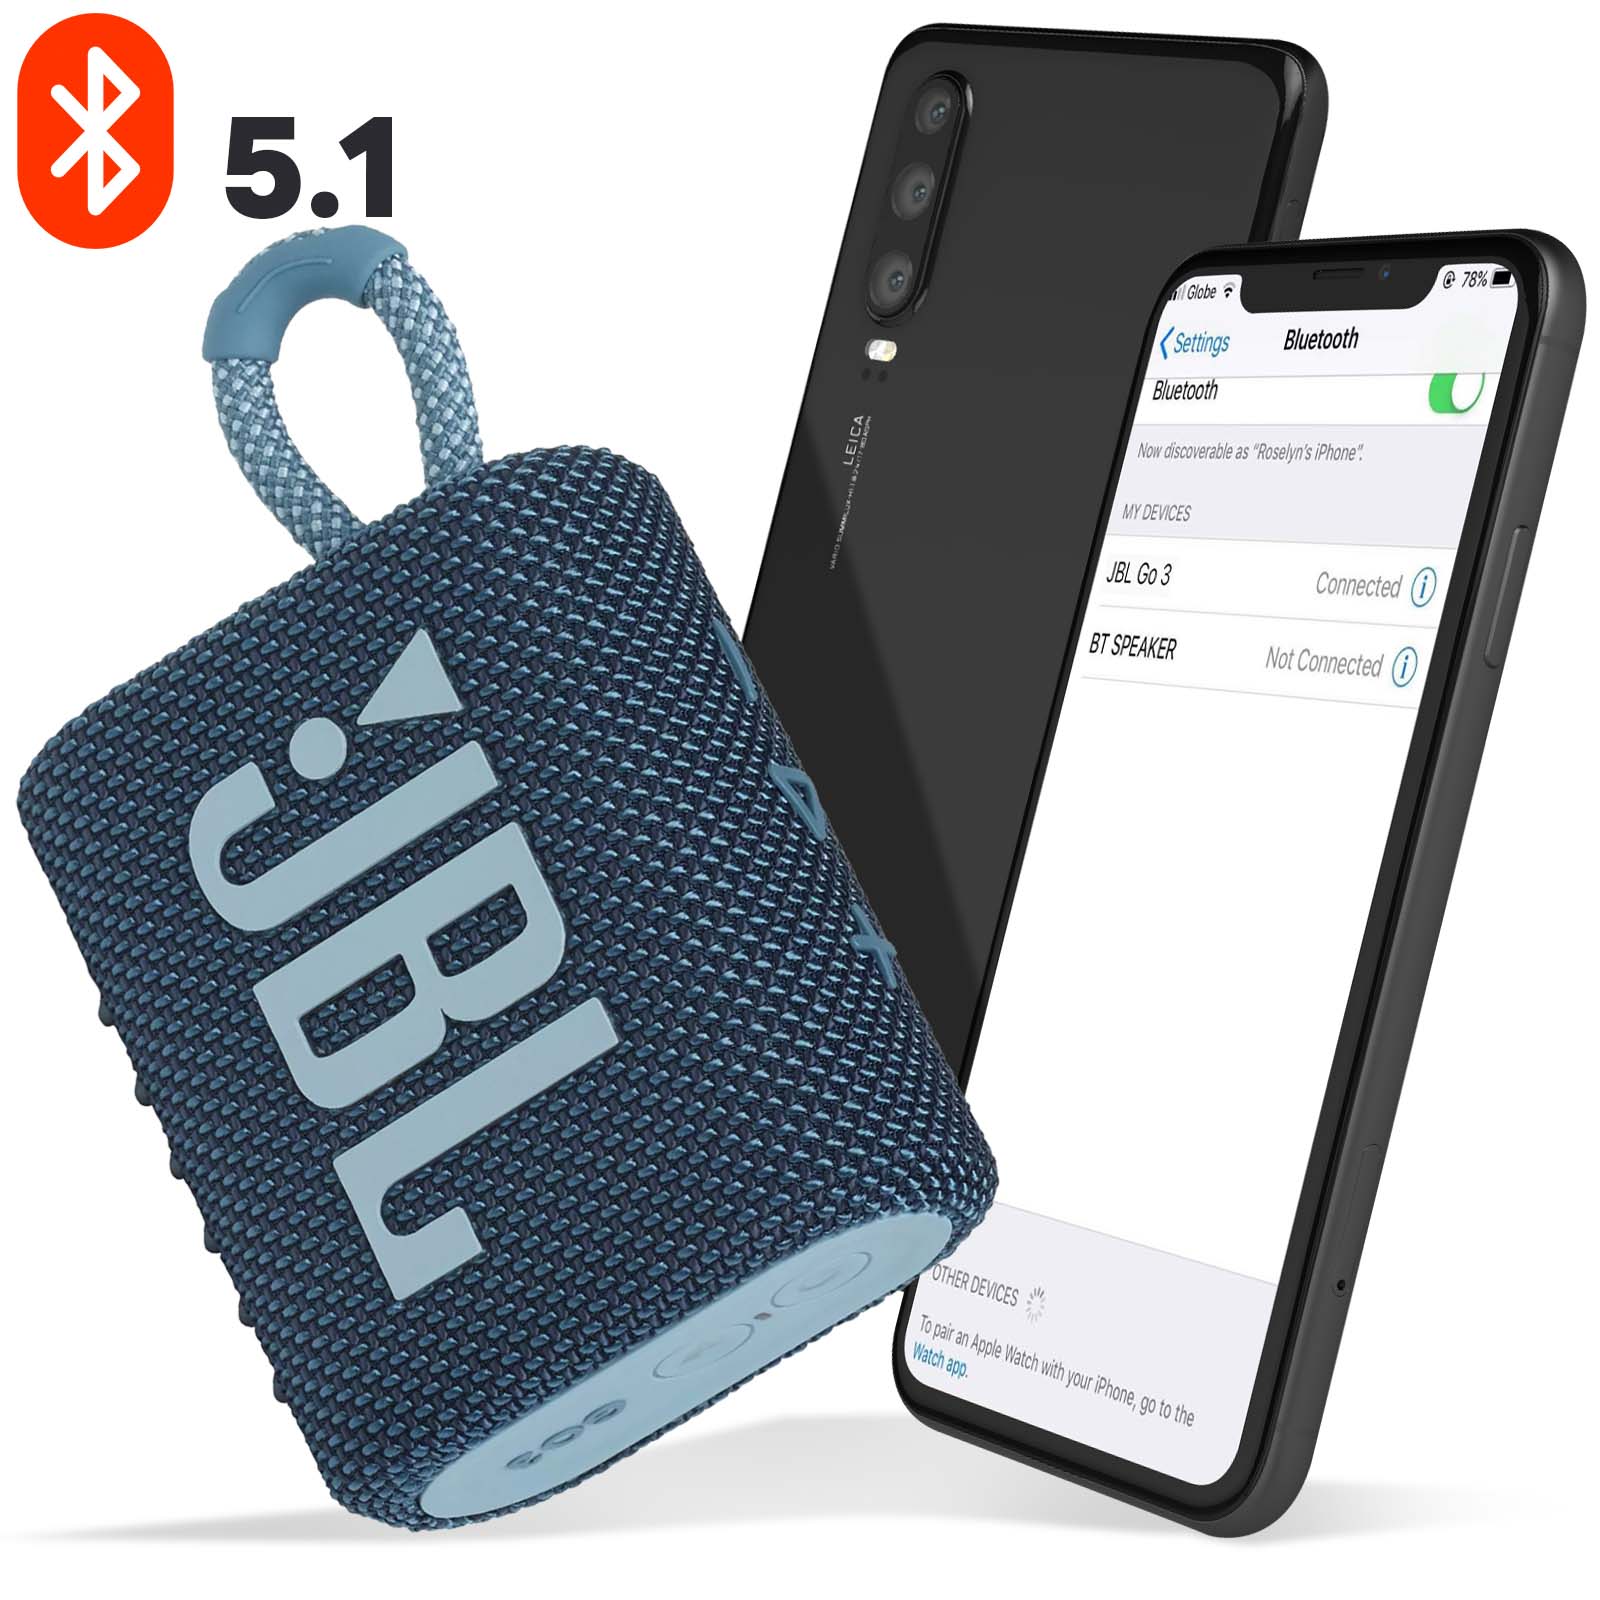 Enceinte Bluetooth Portable JBL GO 3 Bleu